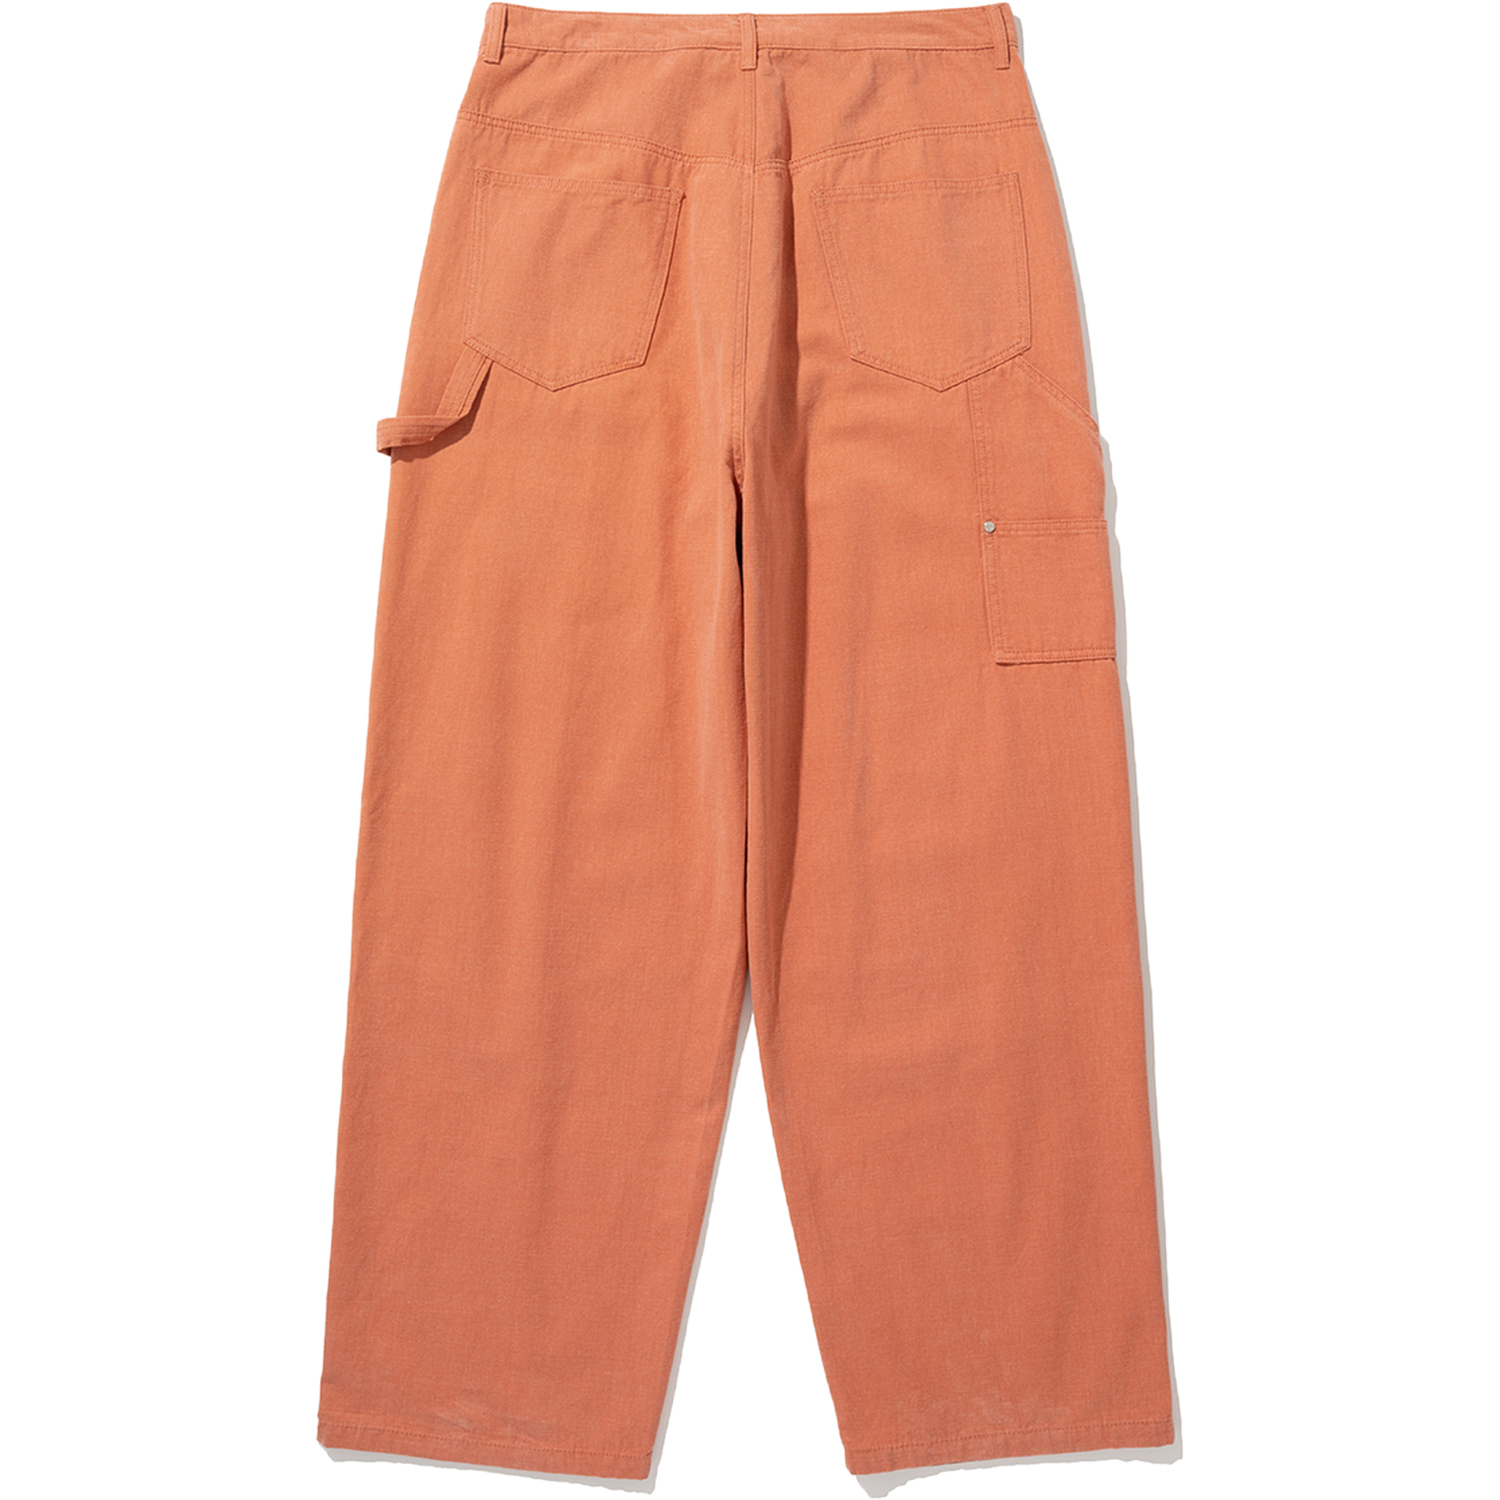 Relax Fit Carpenter Pants - Orange,NOT4NERD